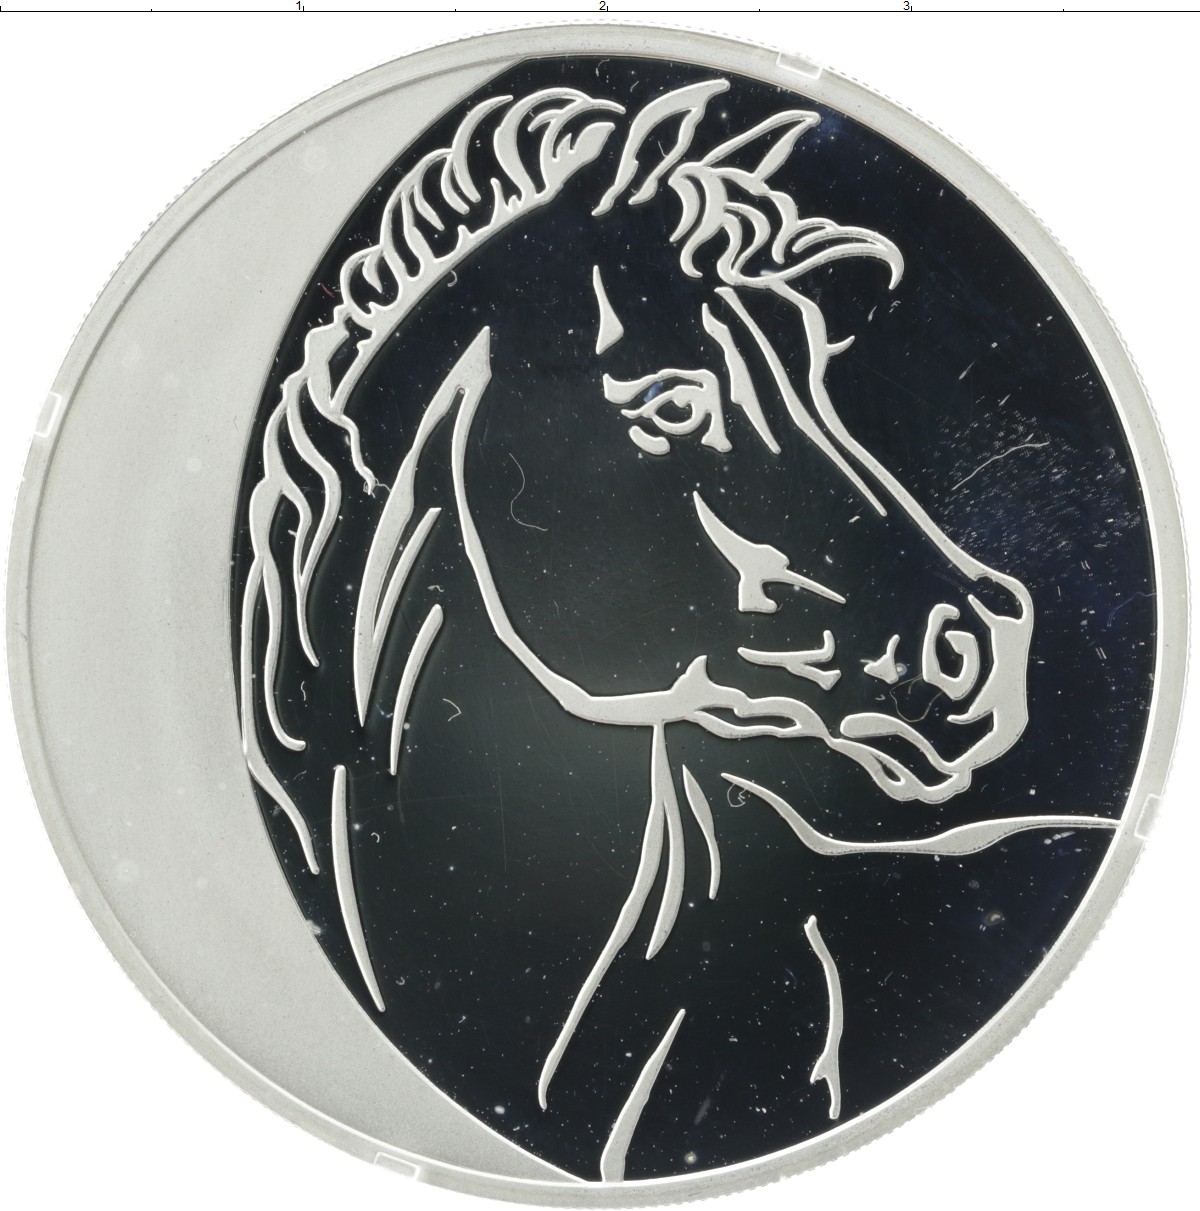 3 рубля 2014 серебро. Монета год лошади 2014 серебро. Монета с изображением лошади. Серебряная монета 3 рубля 2014. Монета с головой коня.